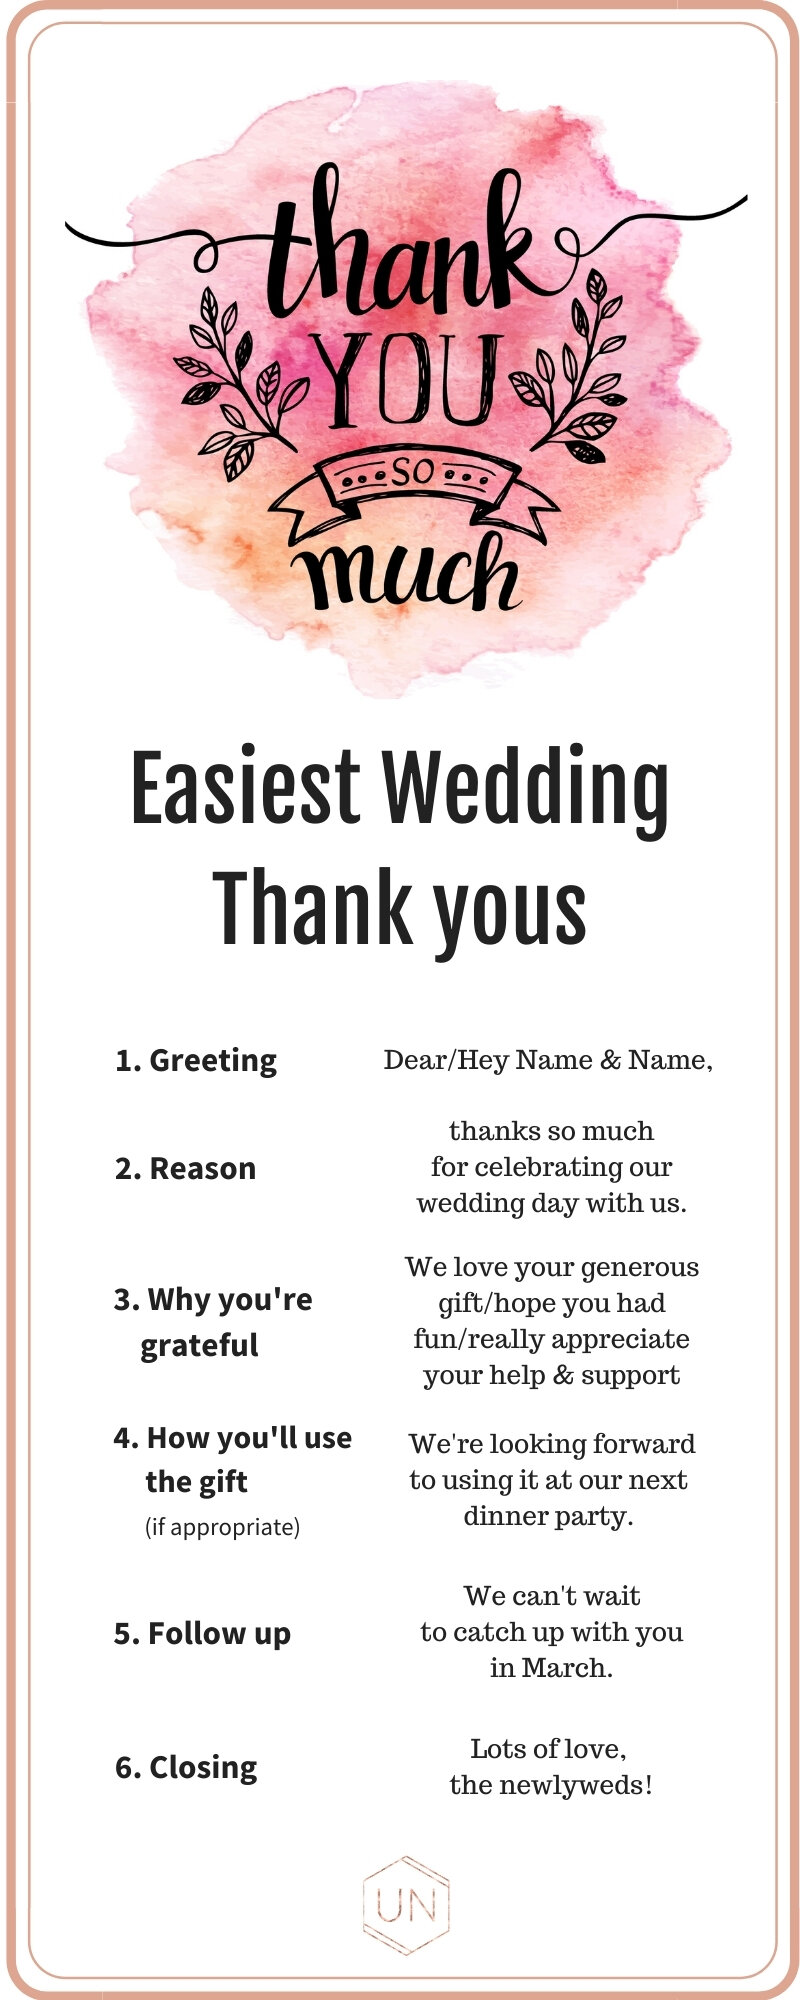 Wedding thank you card wording template — unbridely Intended For Template For Wedding Thank You Cards